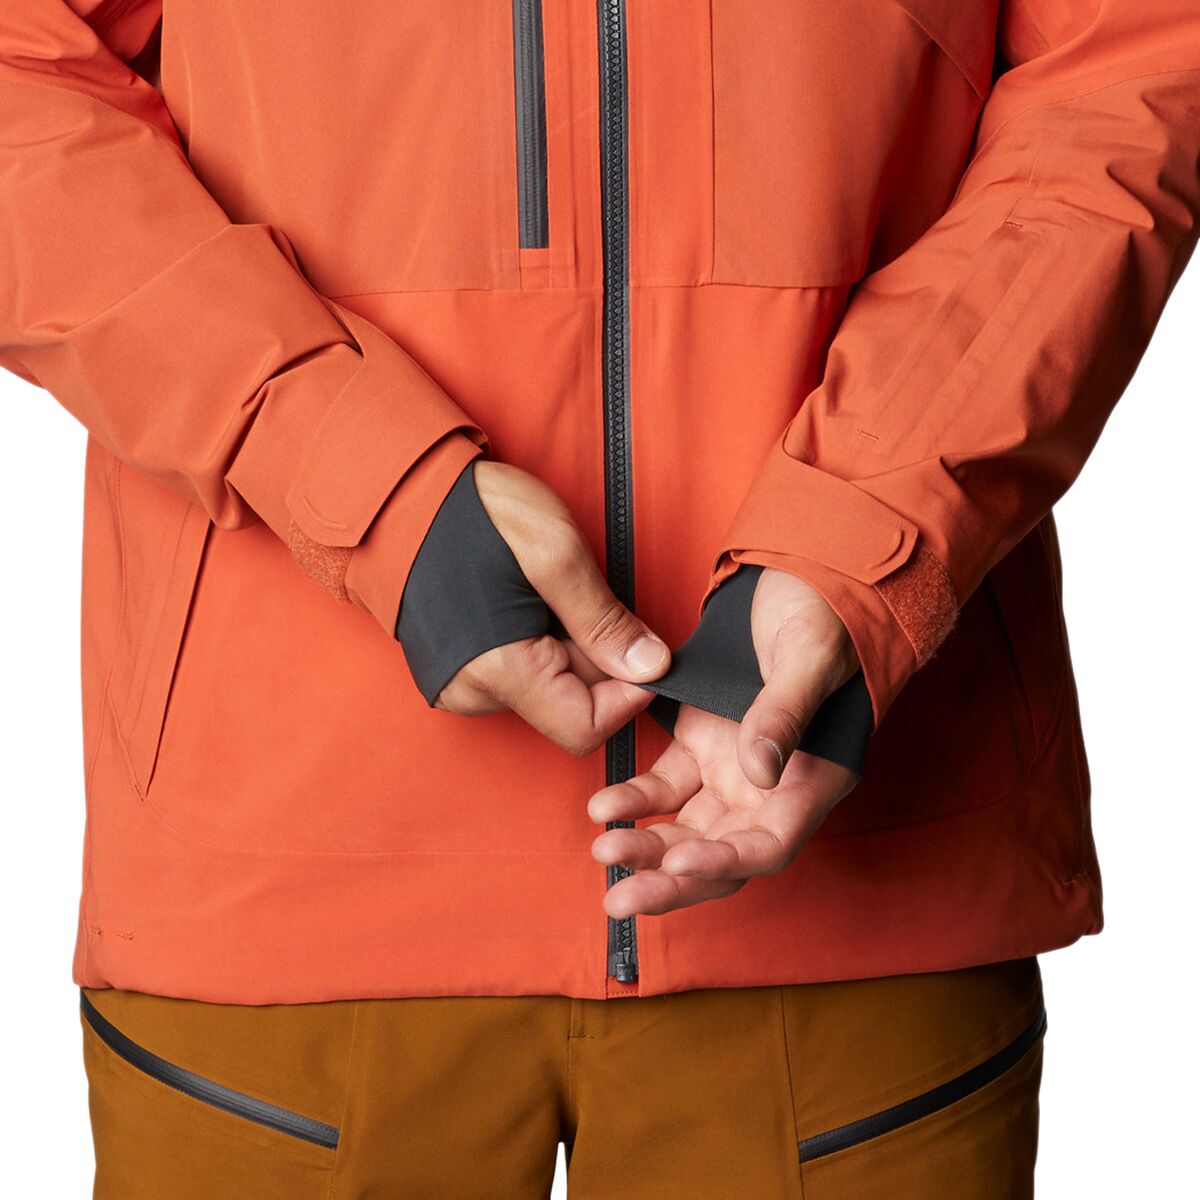 Mountain Hardwear Cloud Bank GTX Jacket - Men's